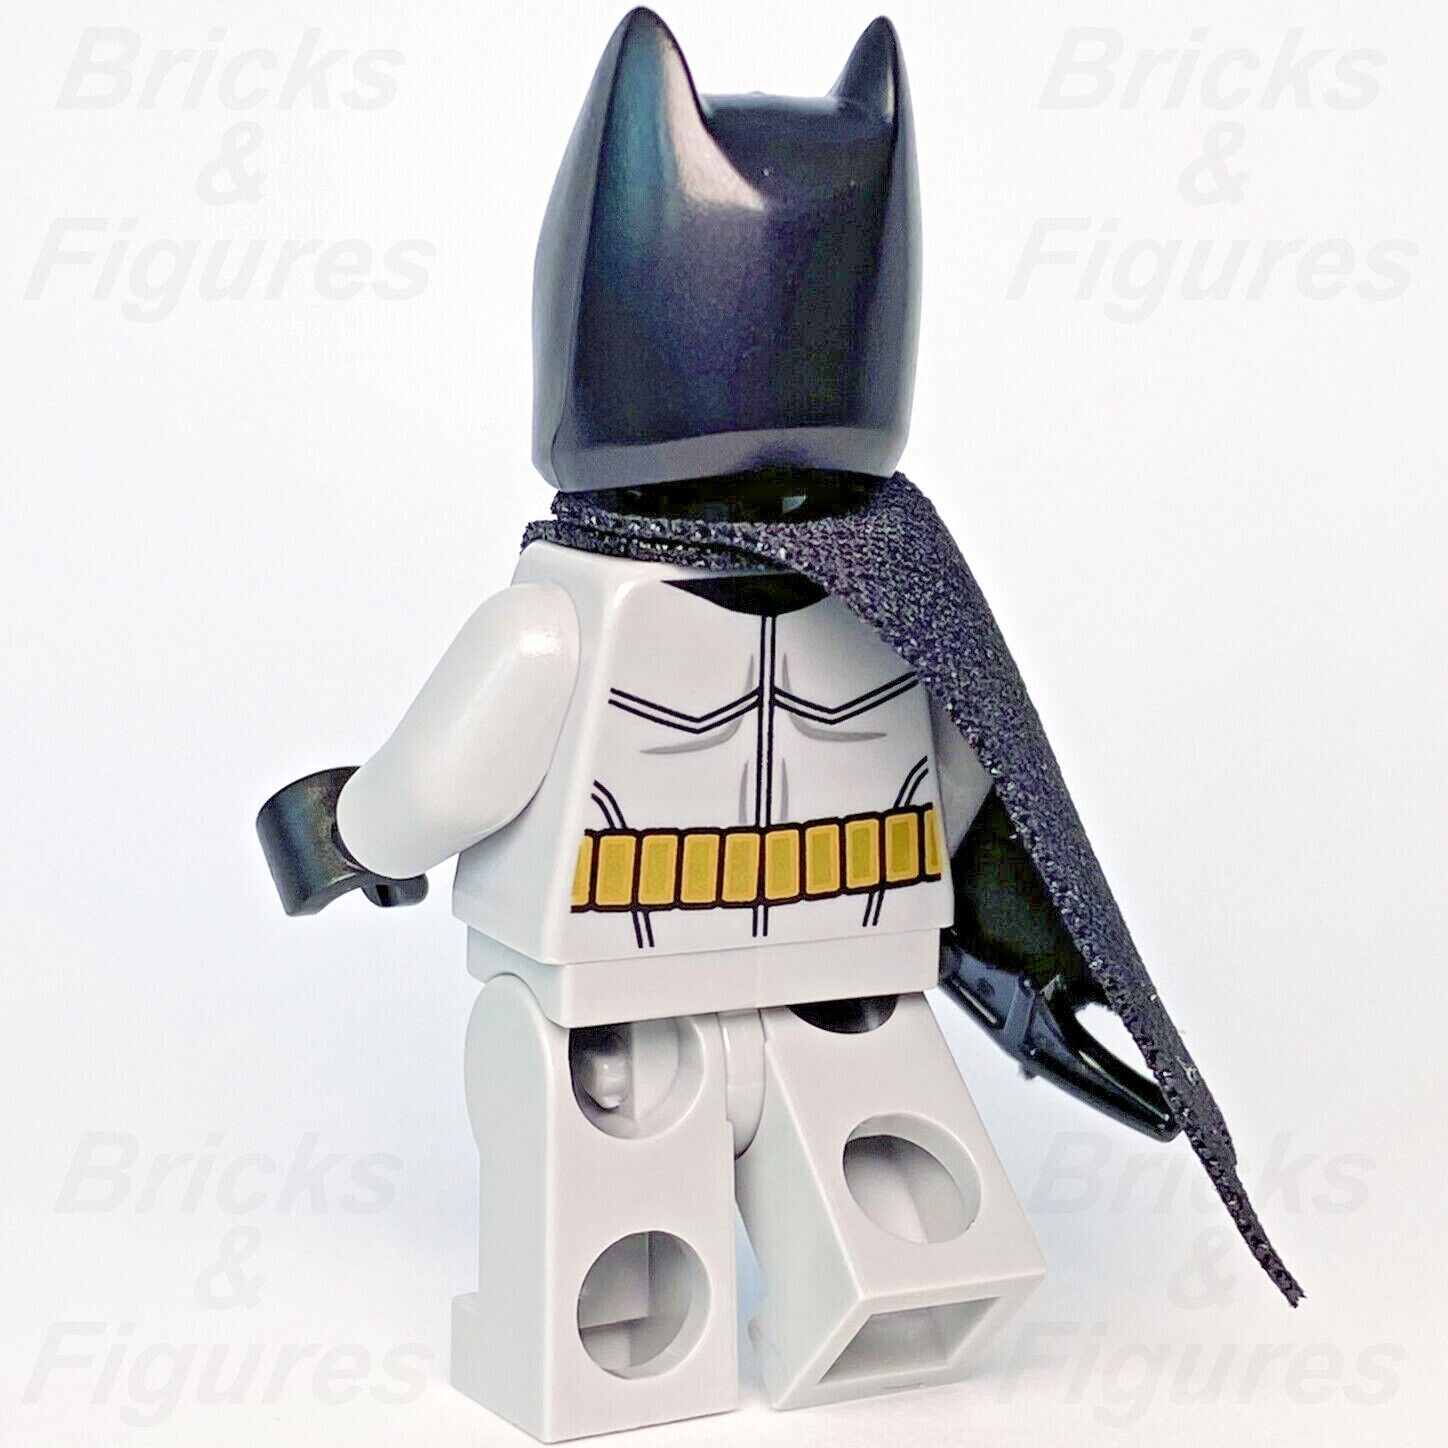 DC Super Heroes LEGO Batman Grey Suit Batman 2 Minifigure 211901 76111 sh531 - Bricks & Figures